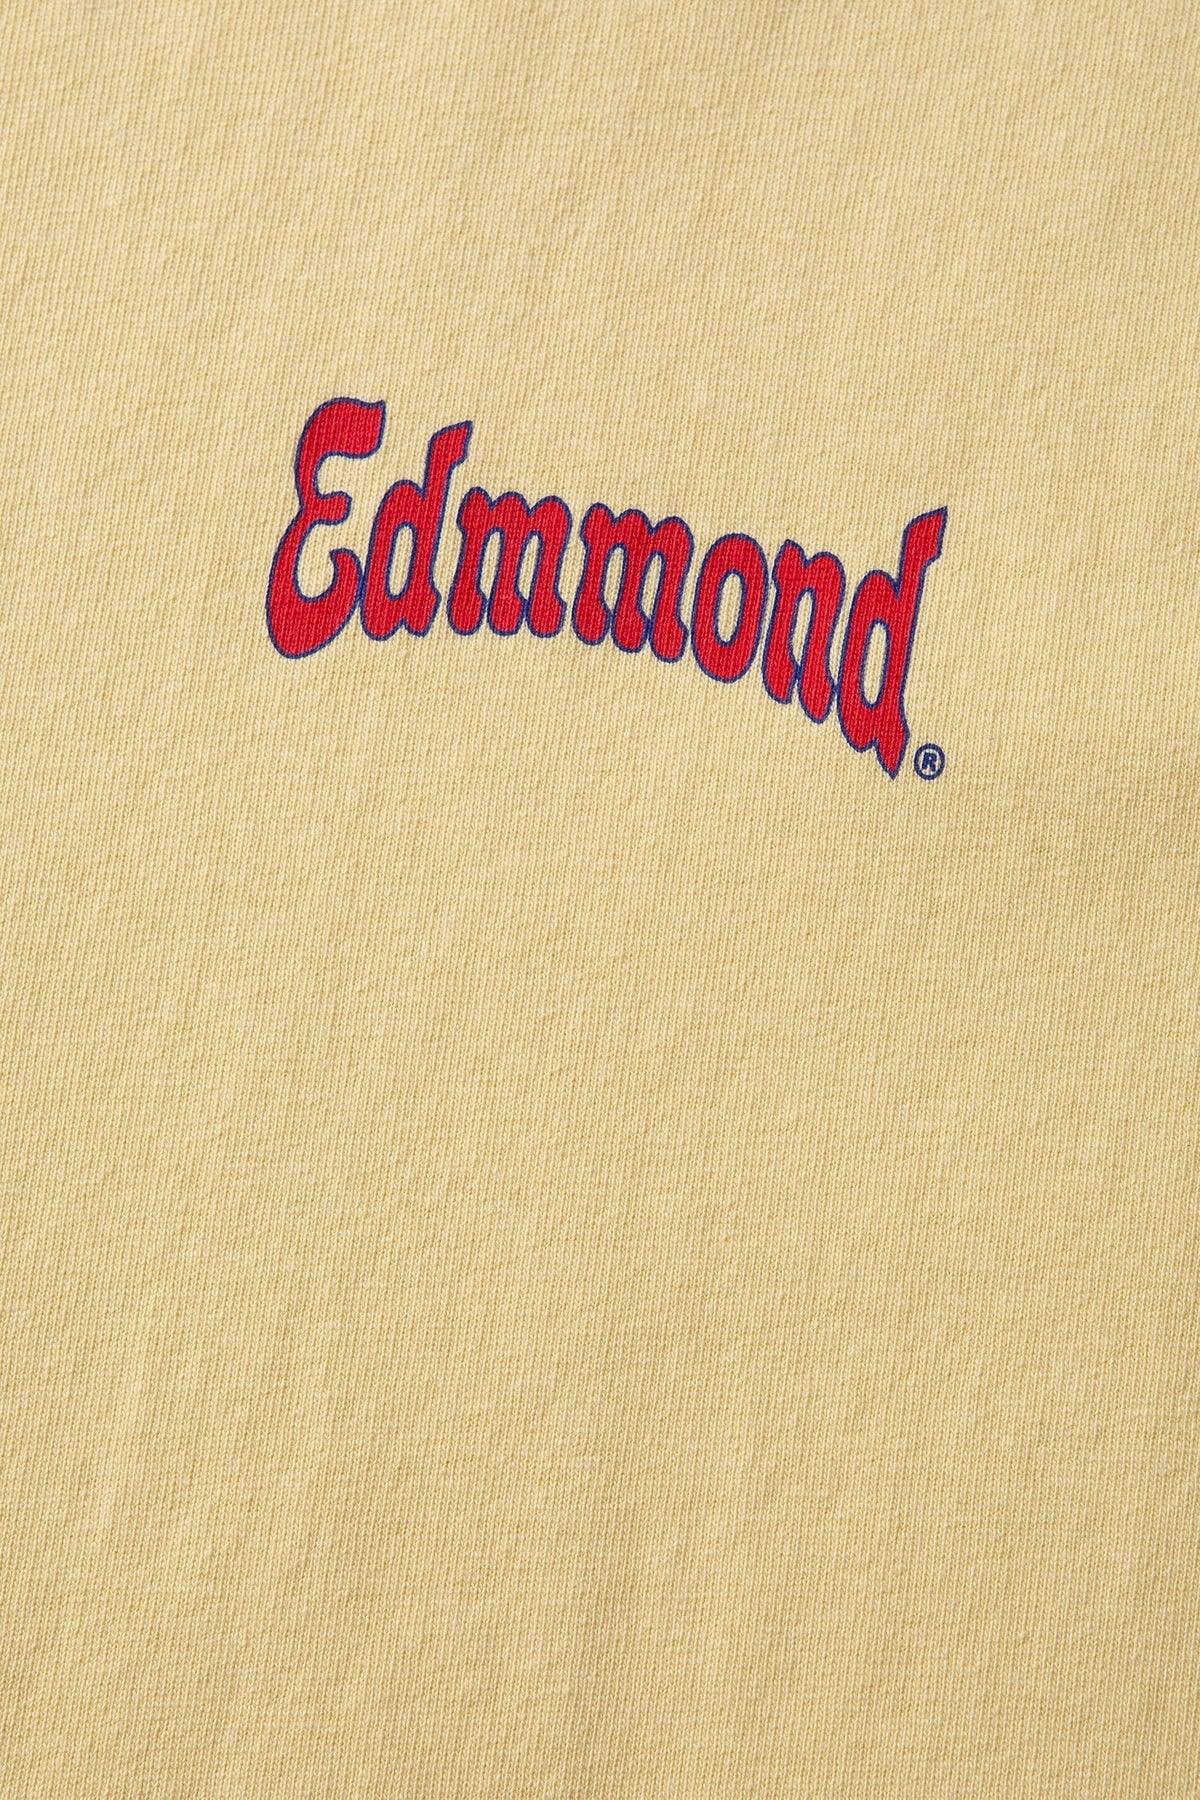 Camiseta Edmmond Studios Curly Shield Plain Yellow - ECRU